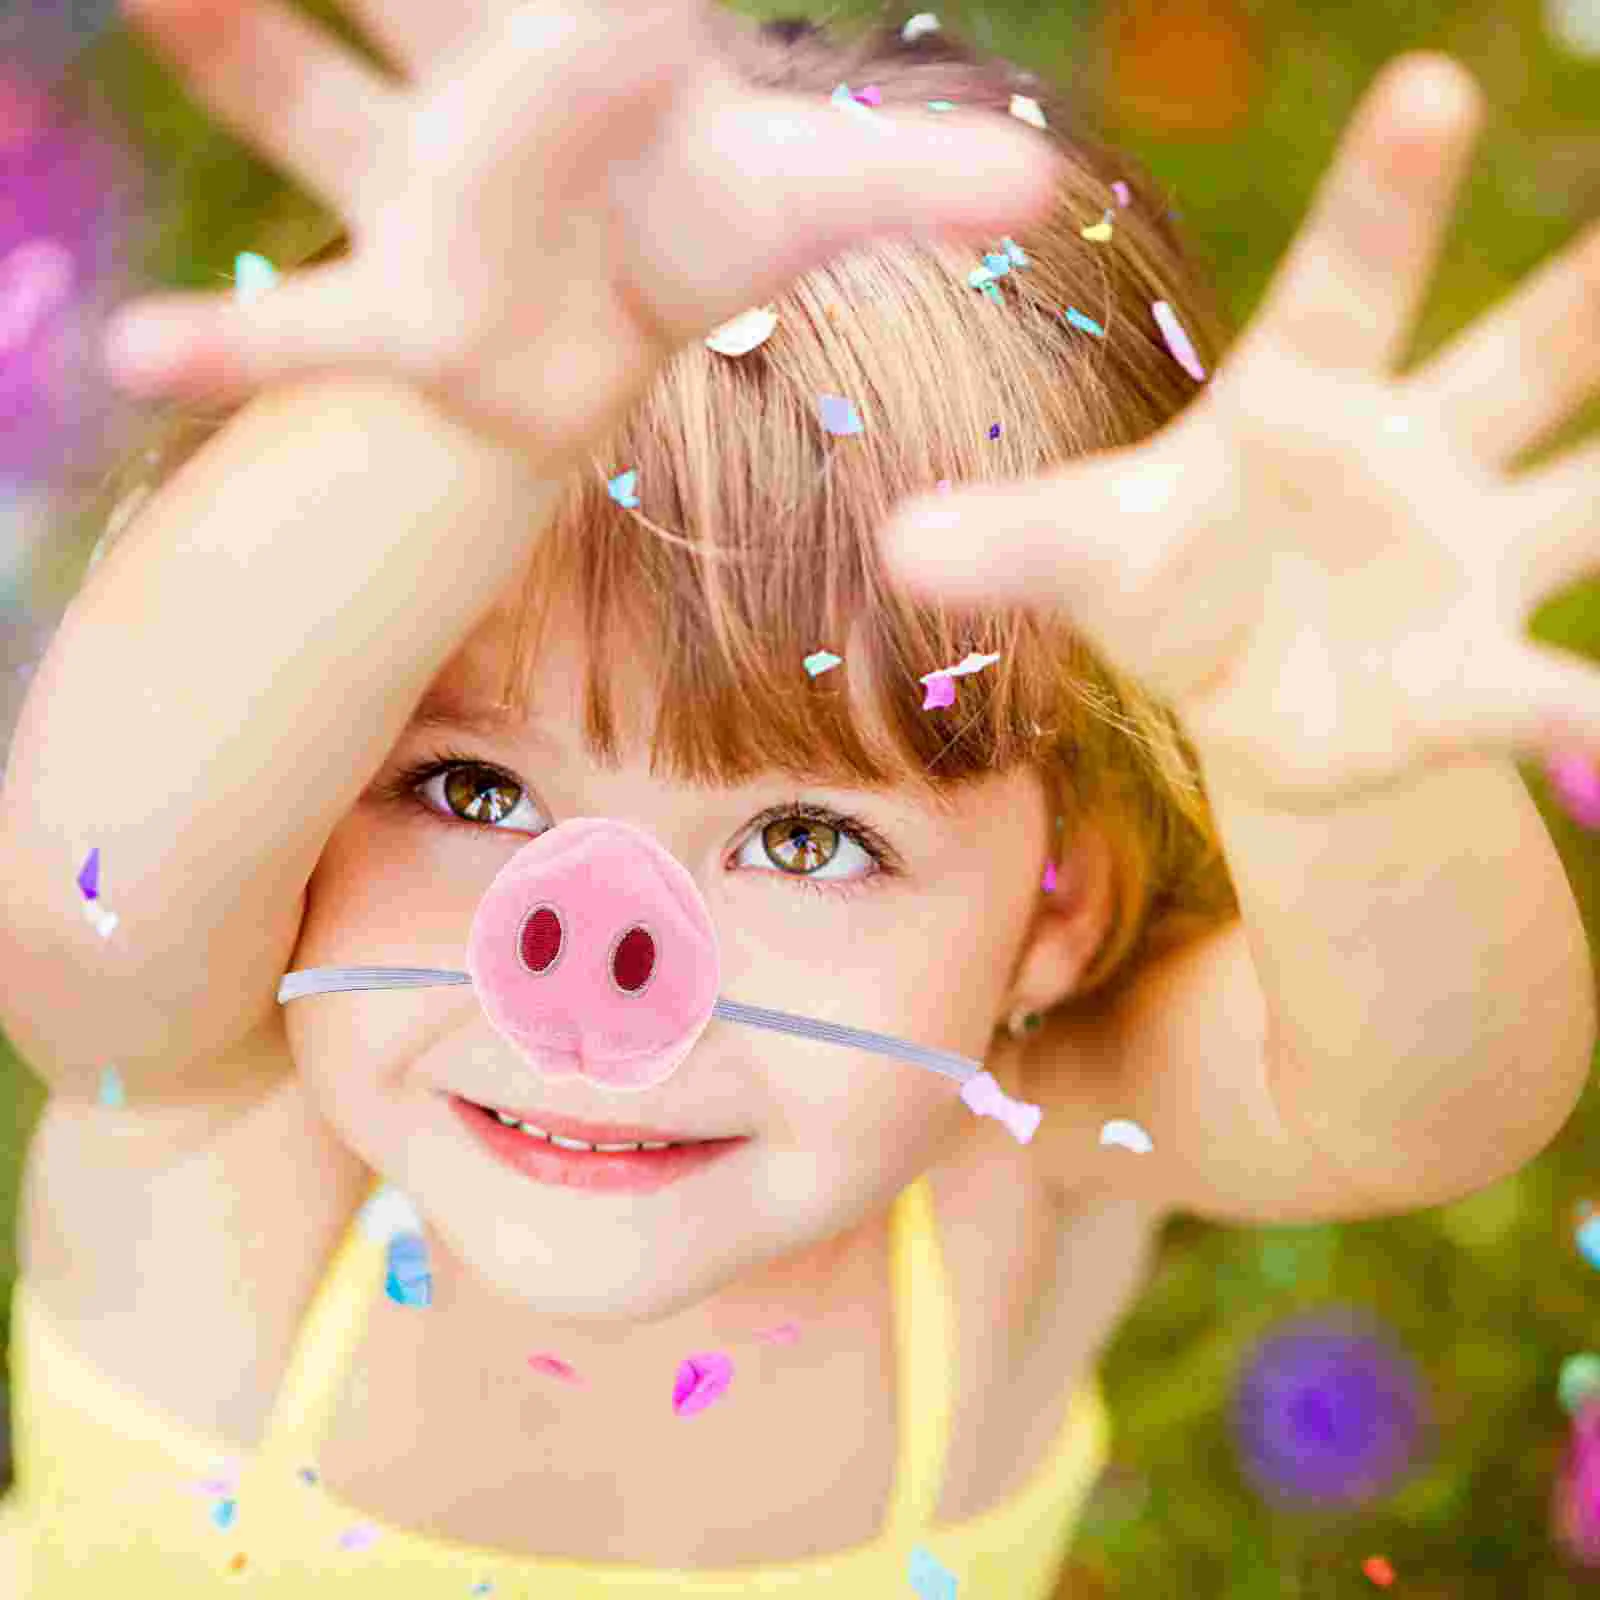 

3pcs Cartoon Simulation Pig Nose Cosplay Accessories Portable Plush Animal Nose Prop Costume Accessories